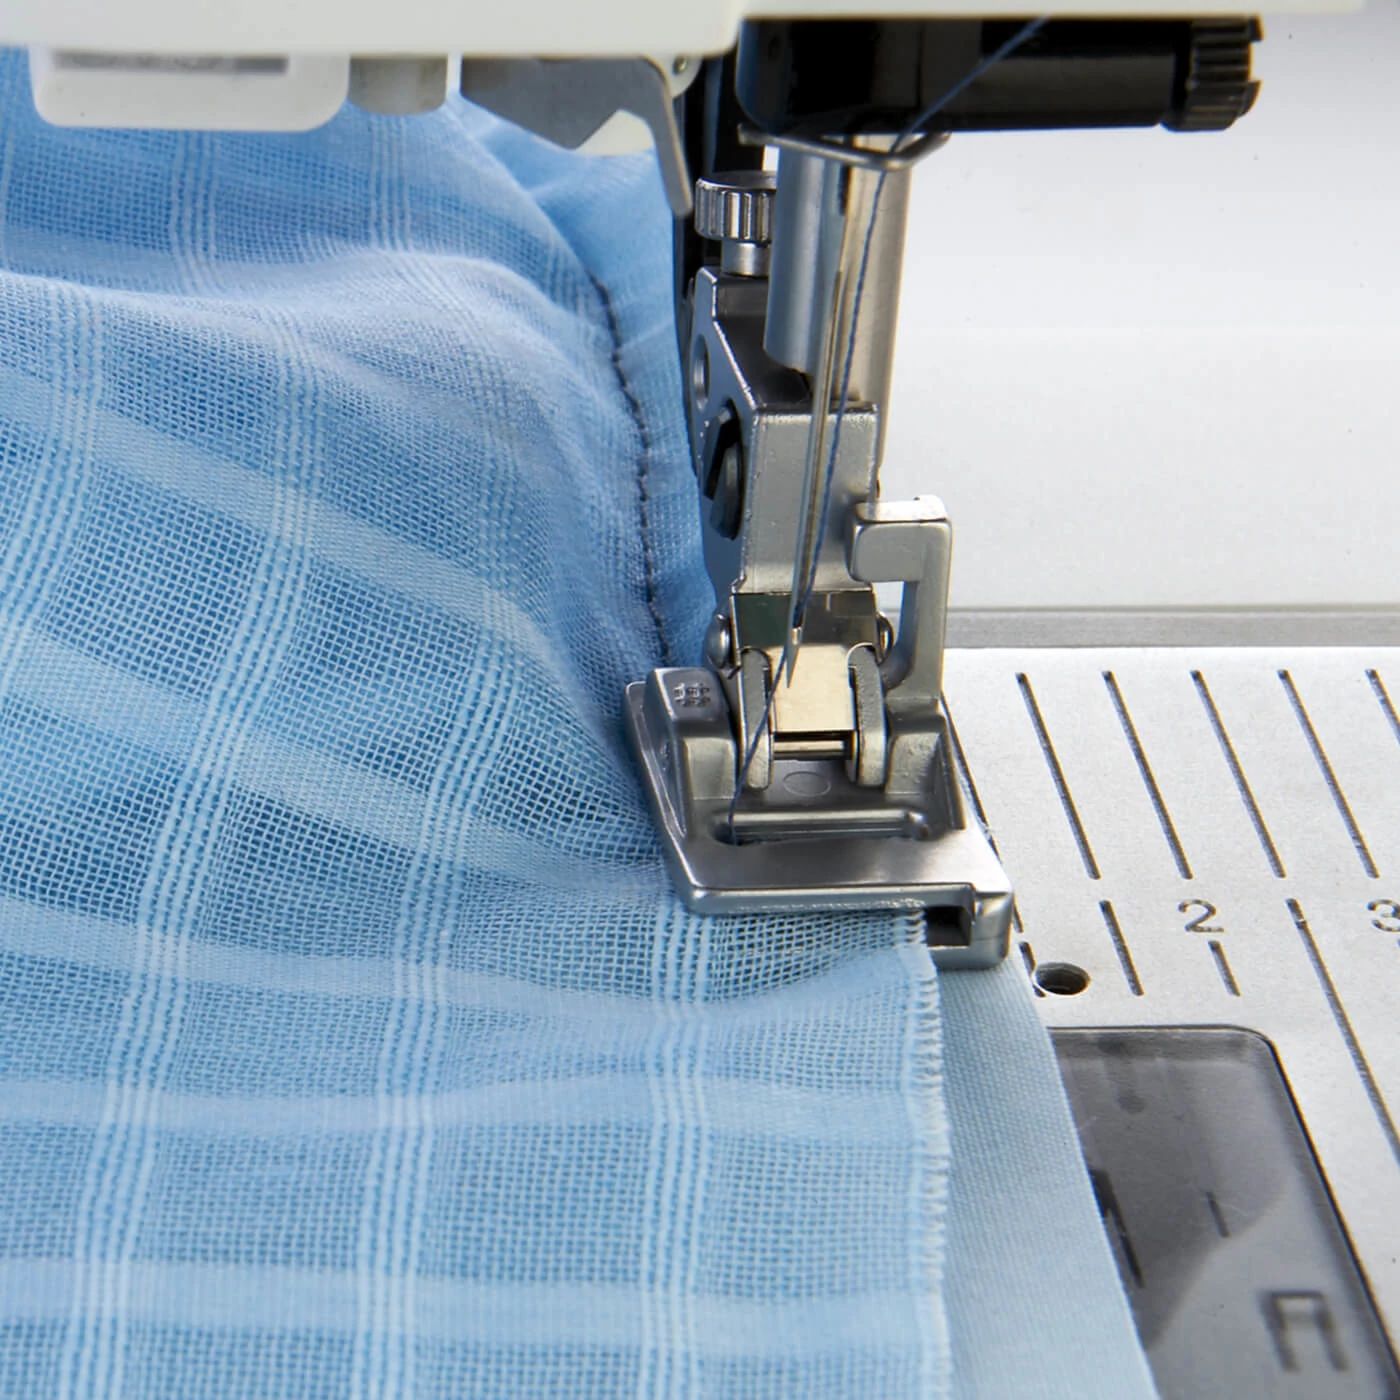 Shop PFAFF sewing machine presser feet